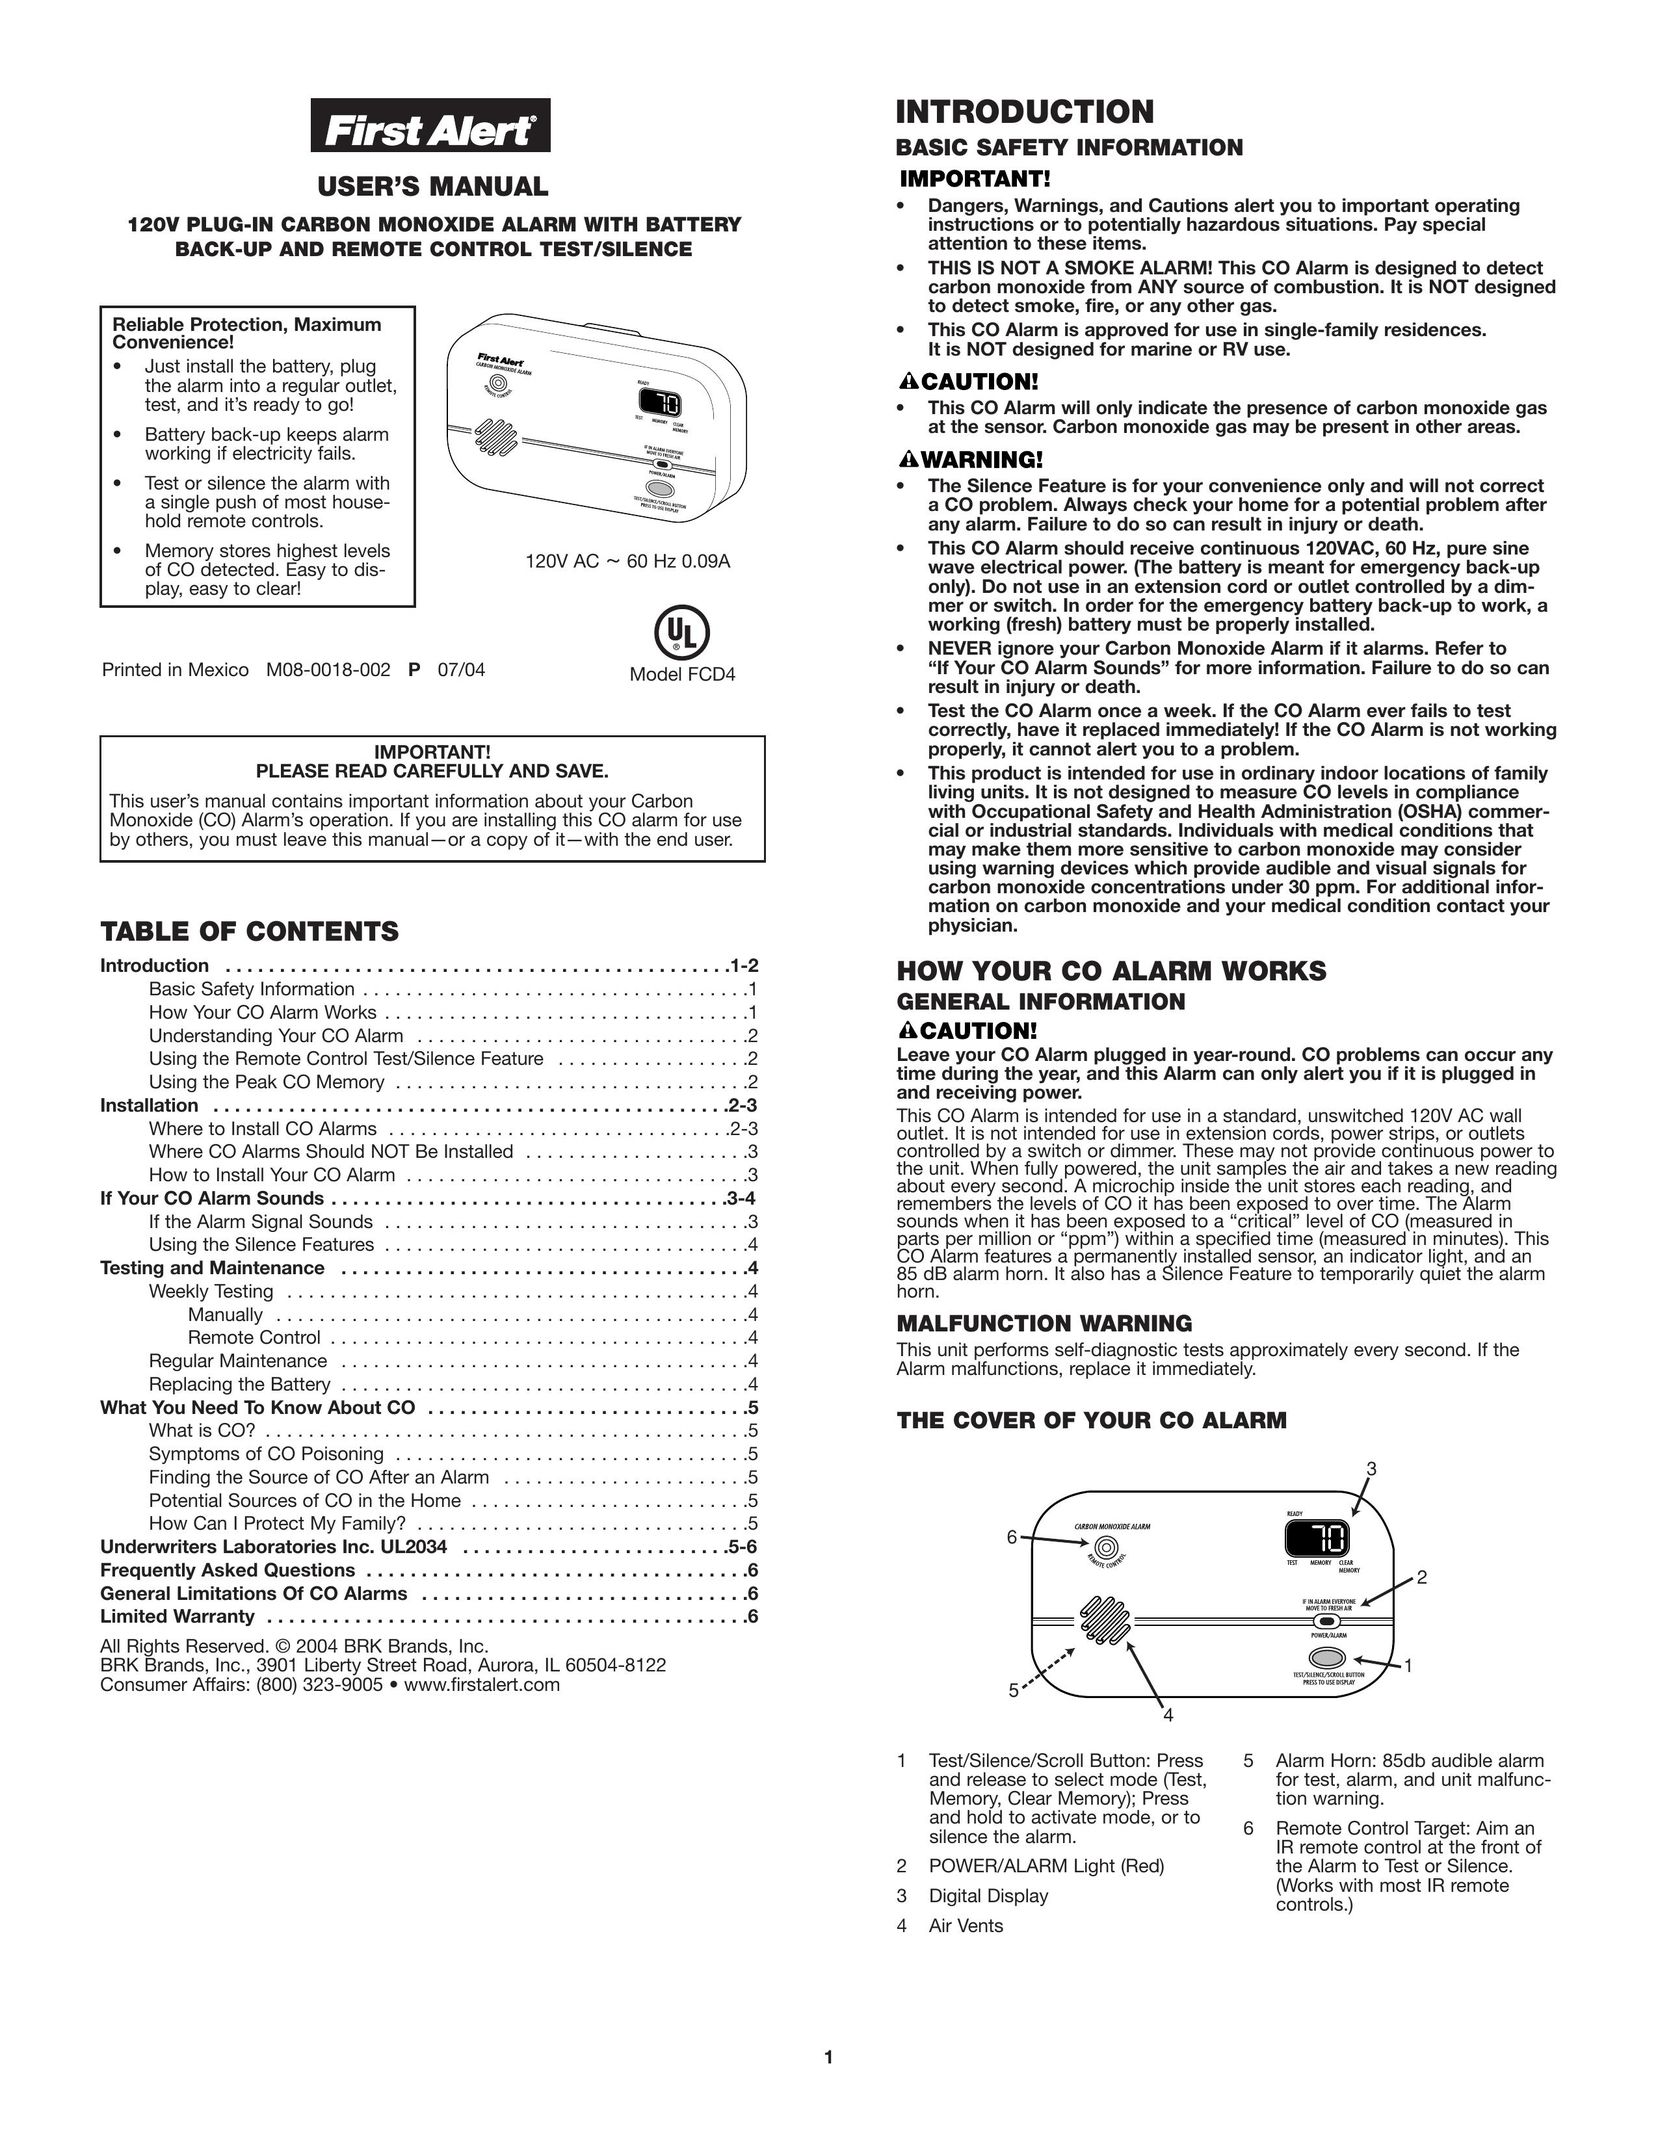 First Alert FCD4 Carbon Monoxide Alarm User Manual